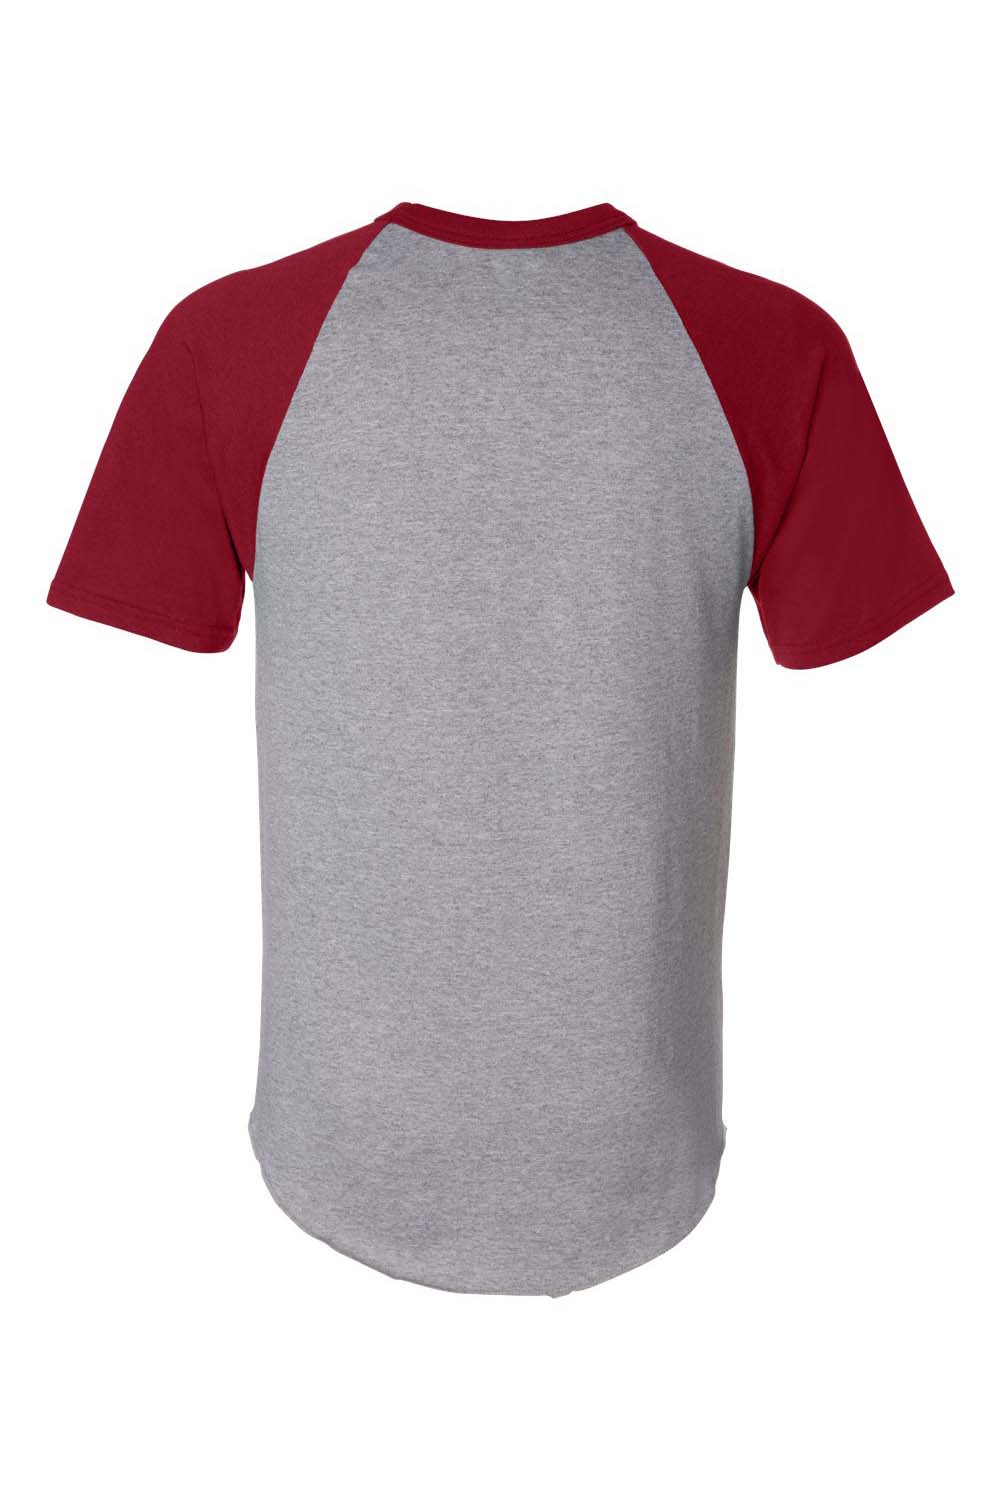 Augusta Sportswear 423 Mens Short Sleeve Crewneck T-Shirt Heather Grey/Red Model Flat Back